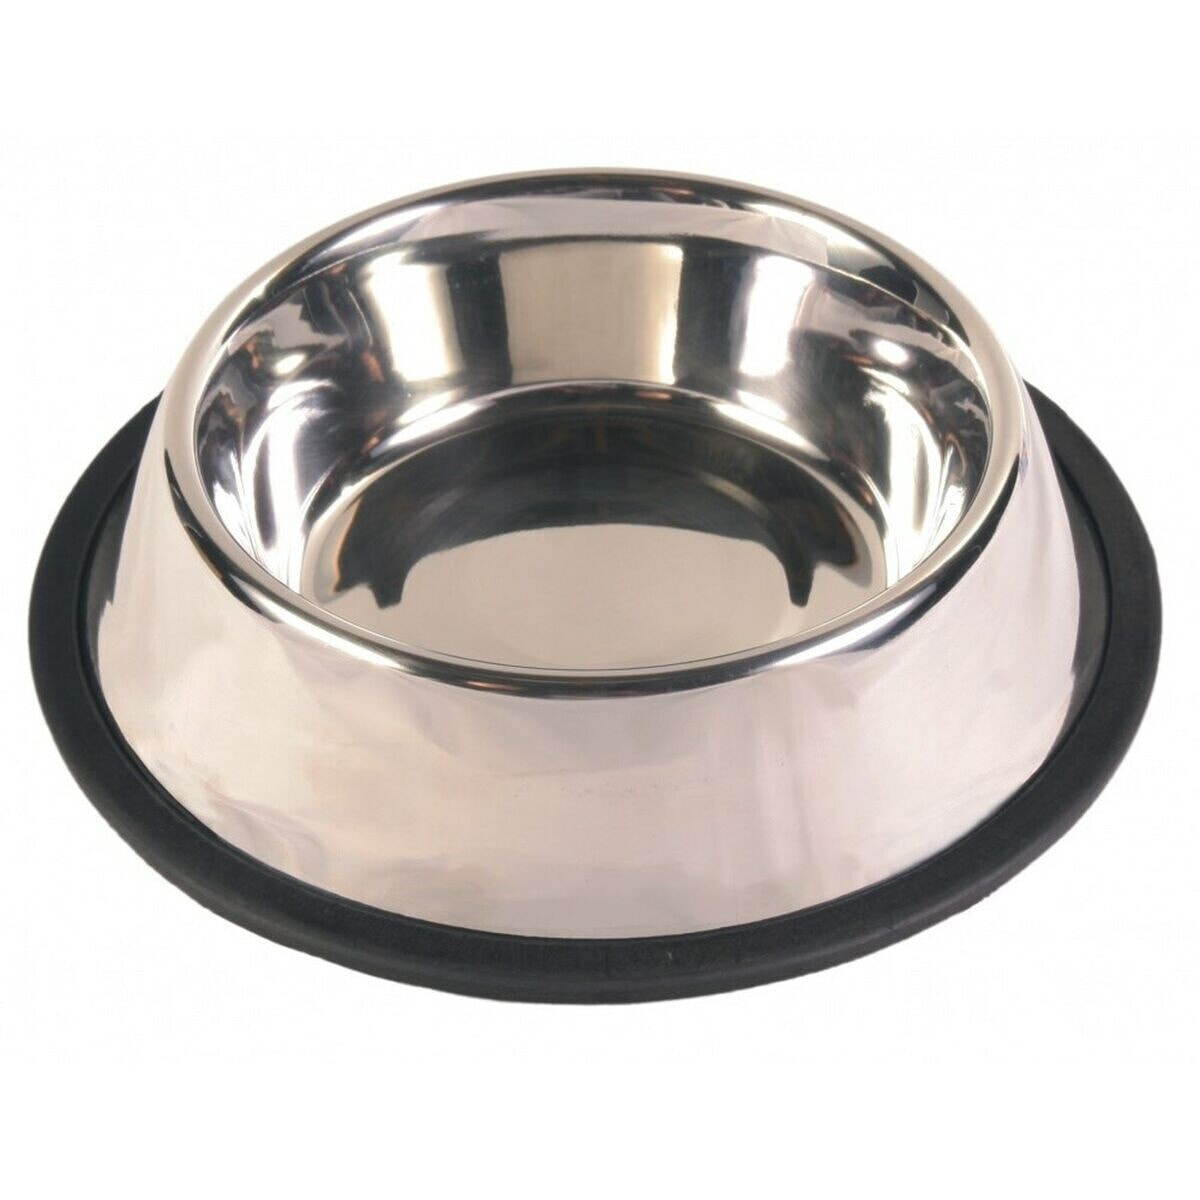 Pet feeding dish Trixie 24855 Bowl Black Monochrome Stainless steel 2,8 L